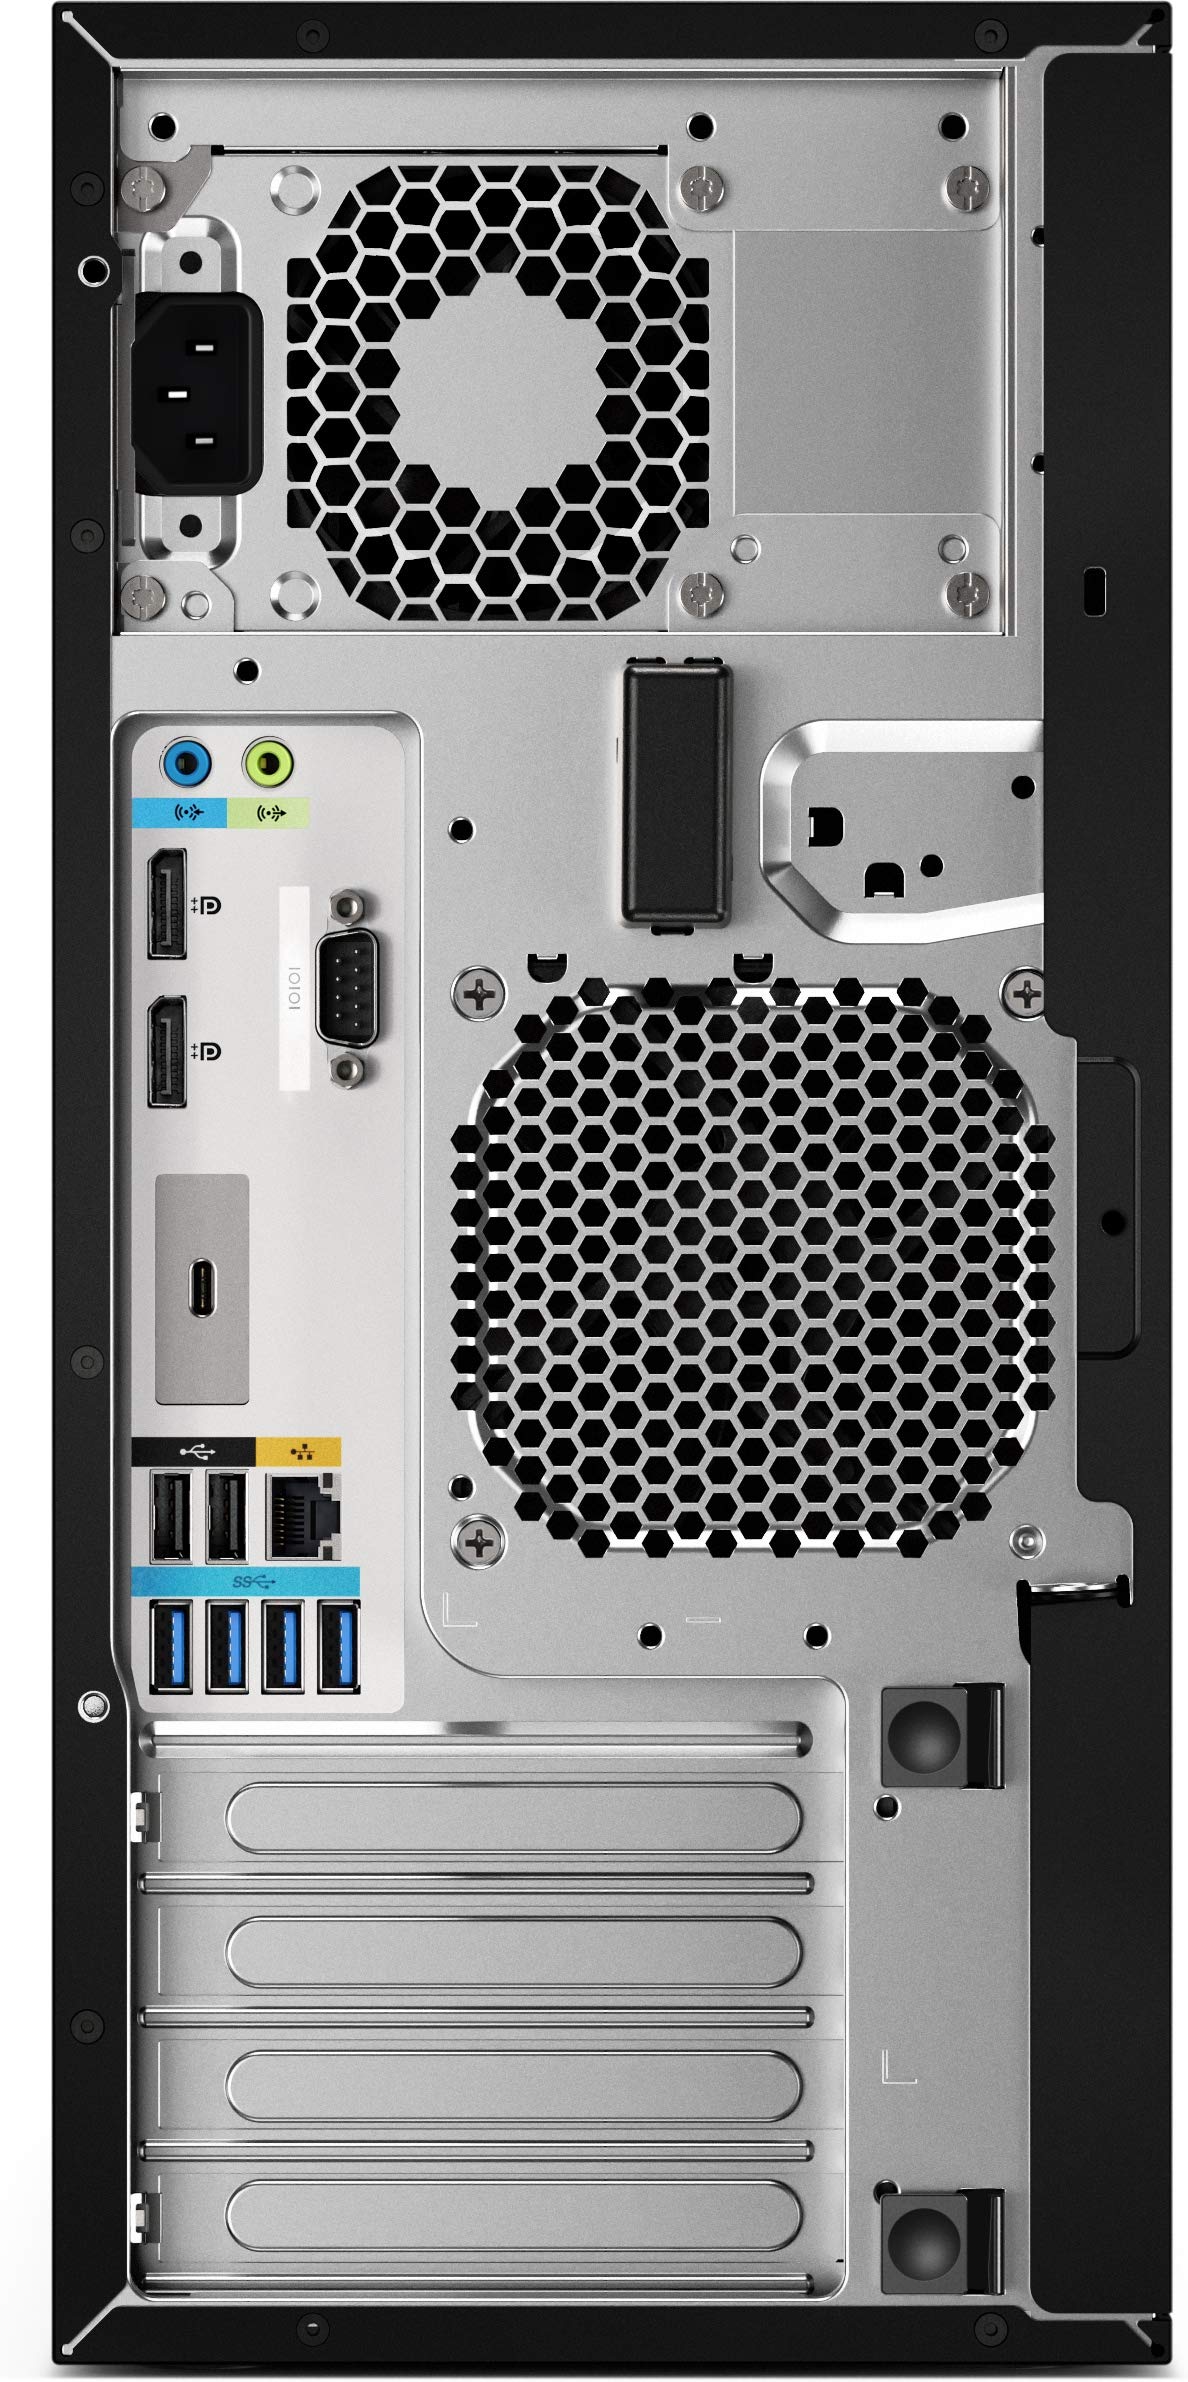 HP Z2 G4 Tower Workstation, 64GB DDR4, 2TB NVMe SSD & 6TB HDD - i9-9900k (8 Core, 5.0GHz), Nvidia Quadro P1000 4GB, DVD RW, SD Card Reader, LAN, Windows 11 Pro (Renewed)